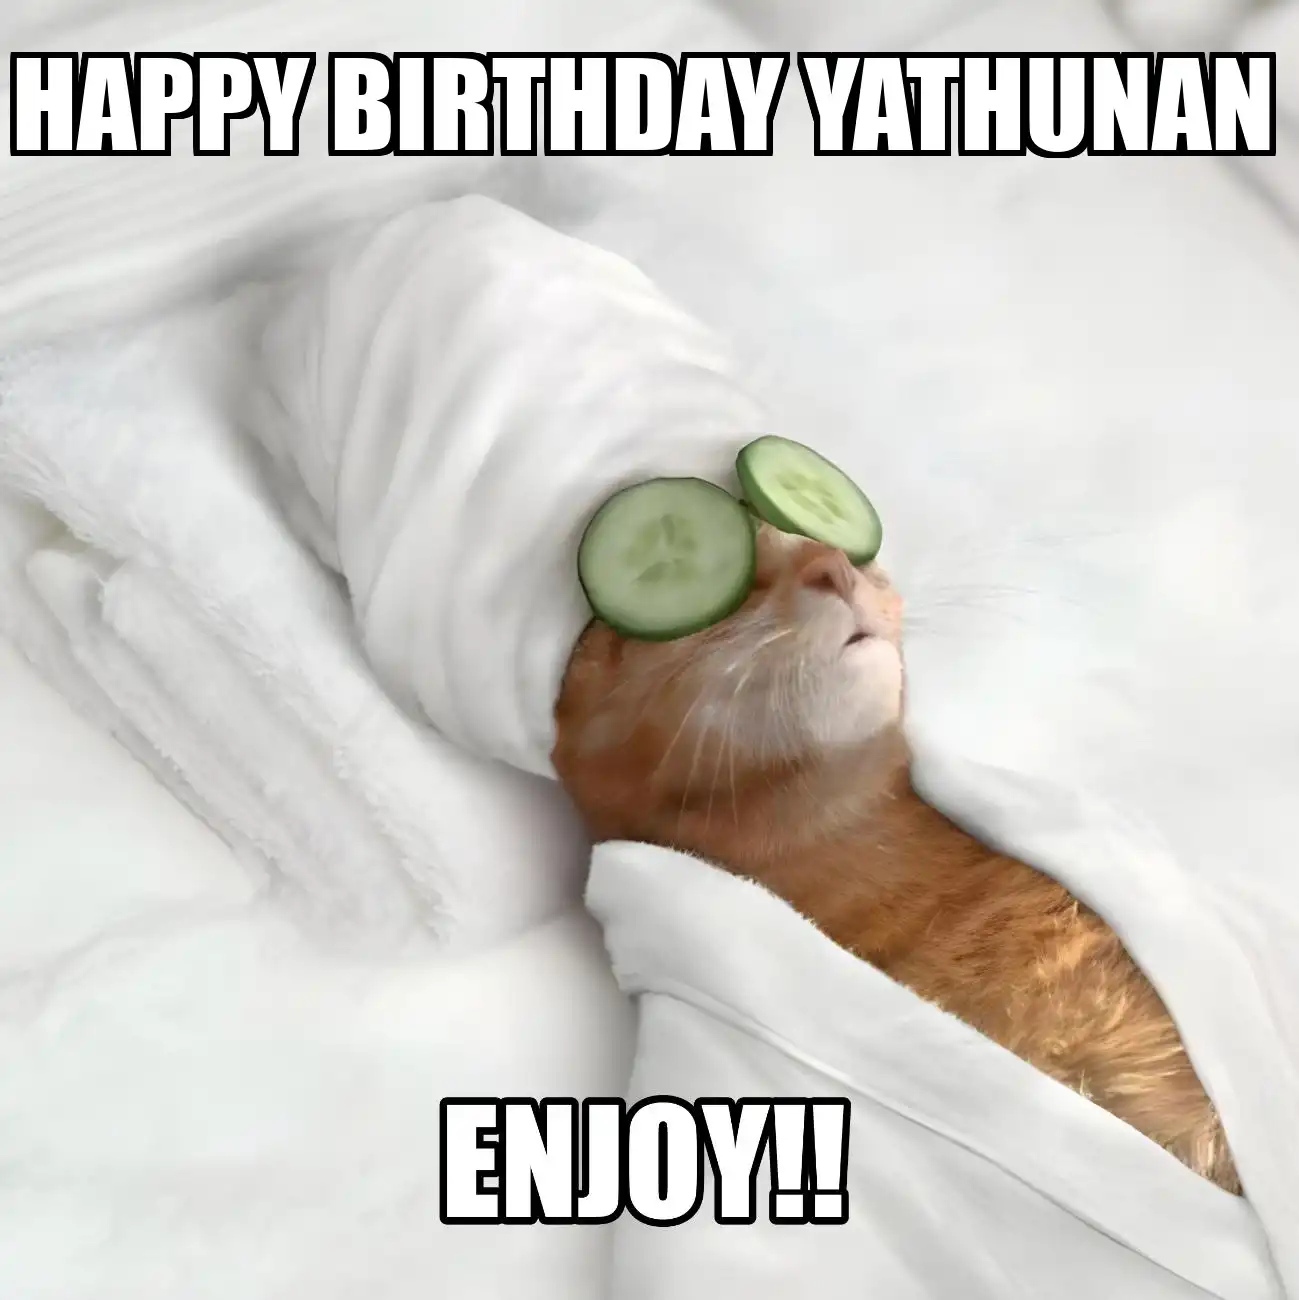 Happy Birthday Yathunan Enjoy Cat Meme